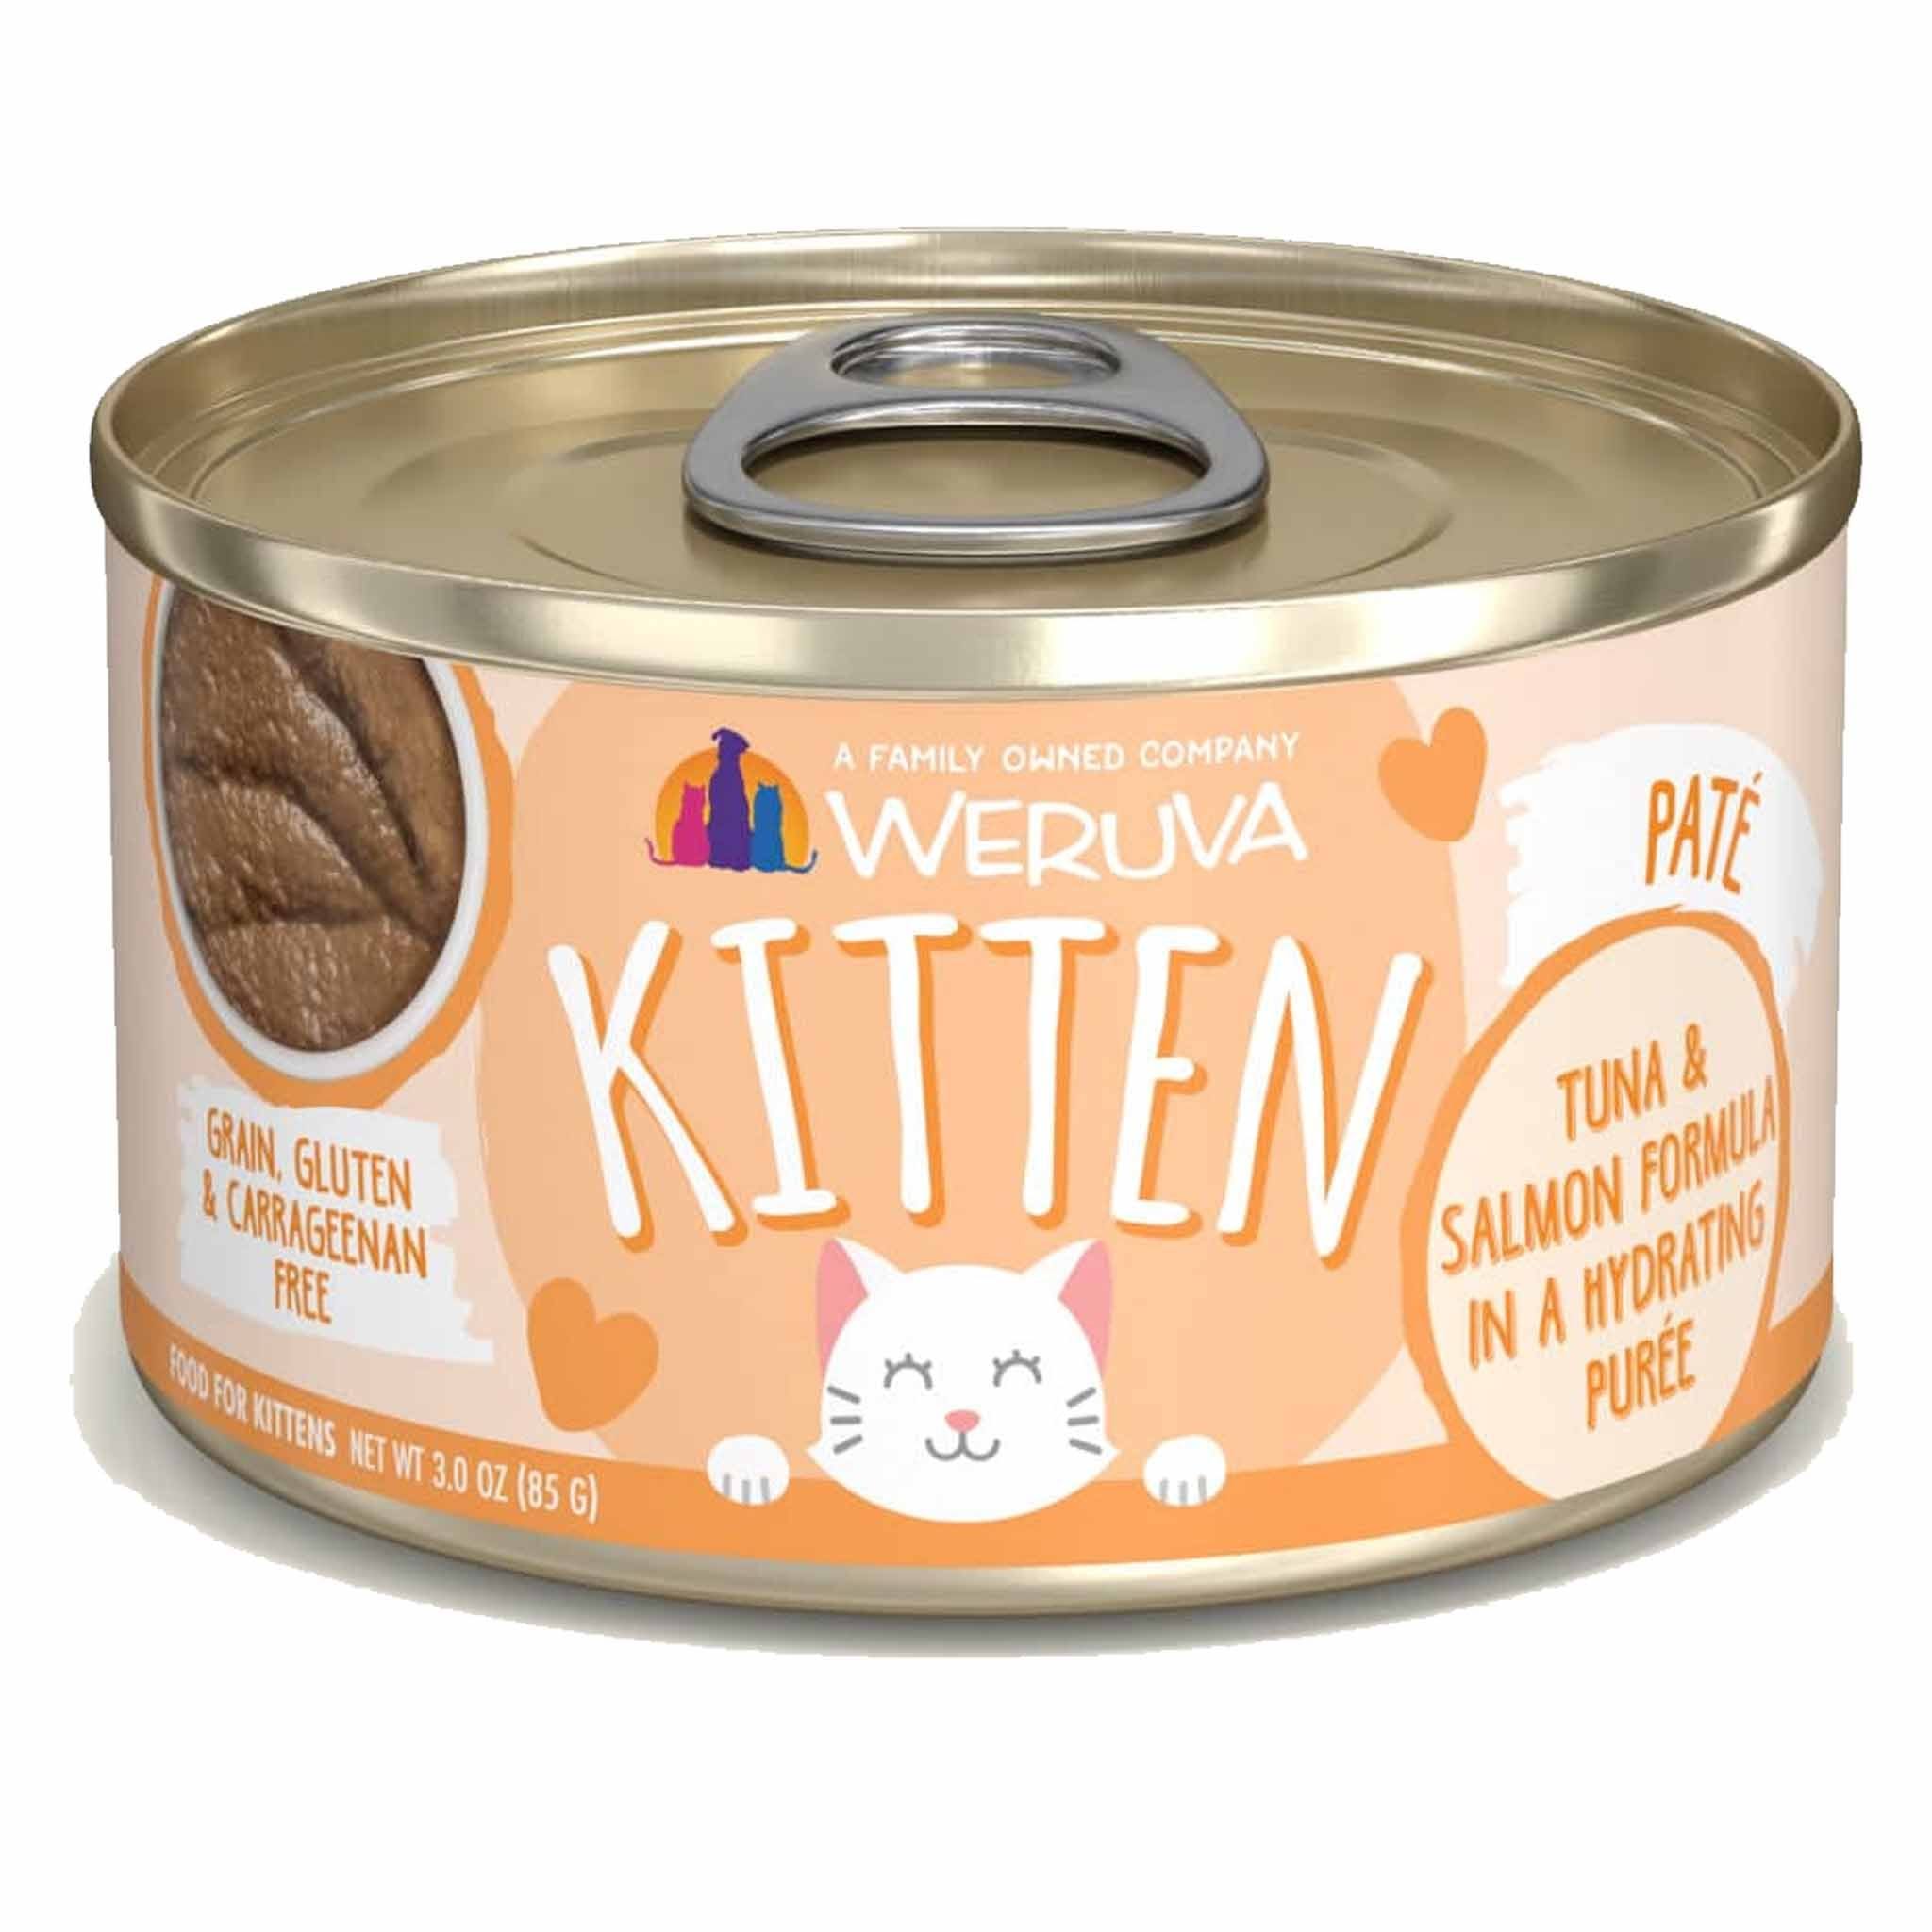 Weruva Kitten Canned Cat Food 3oz, Tuna & Salmon Formula in A Hydrating Puree